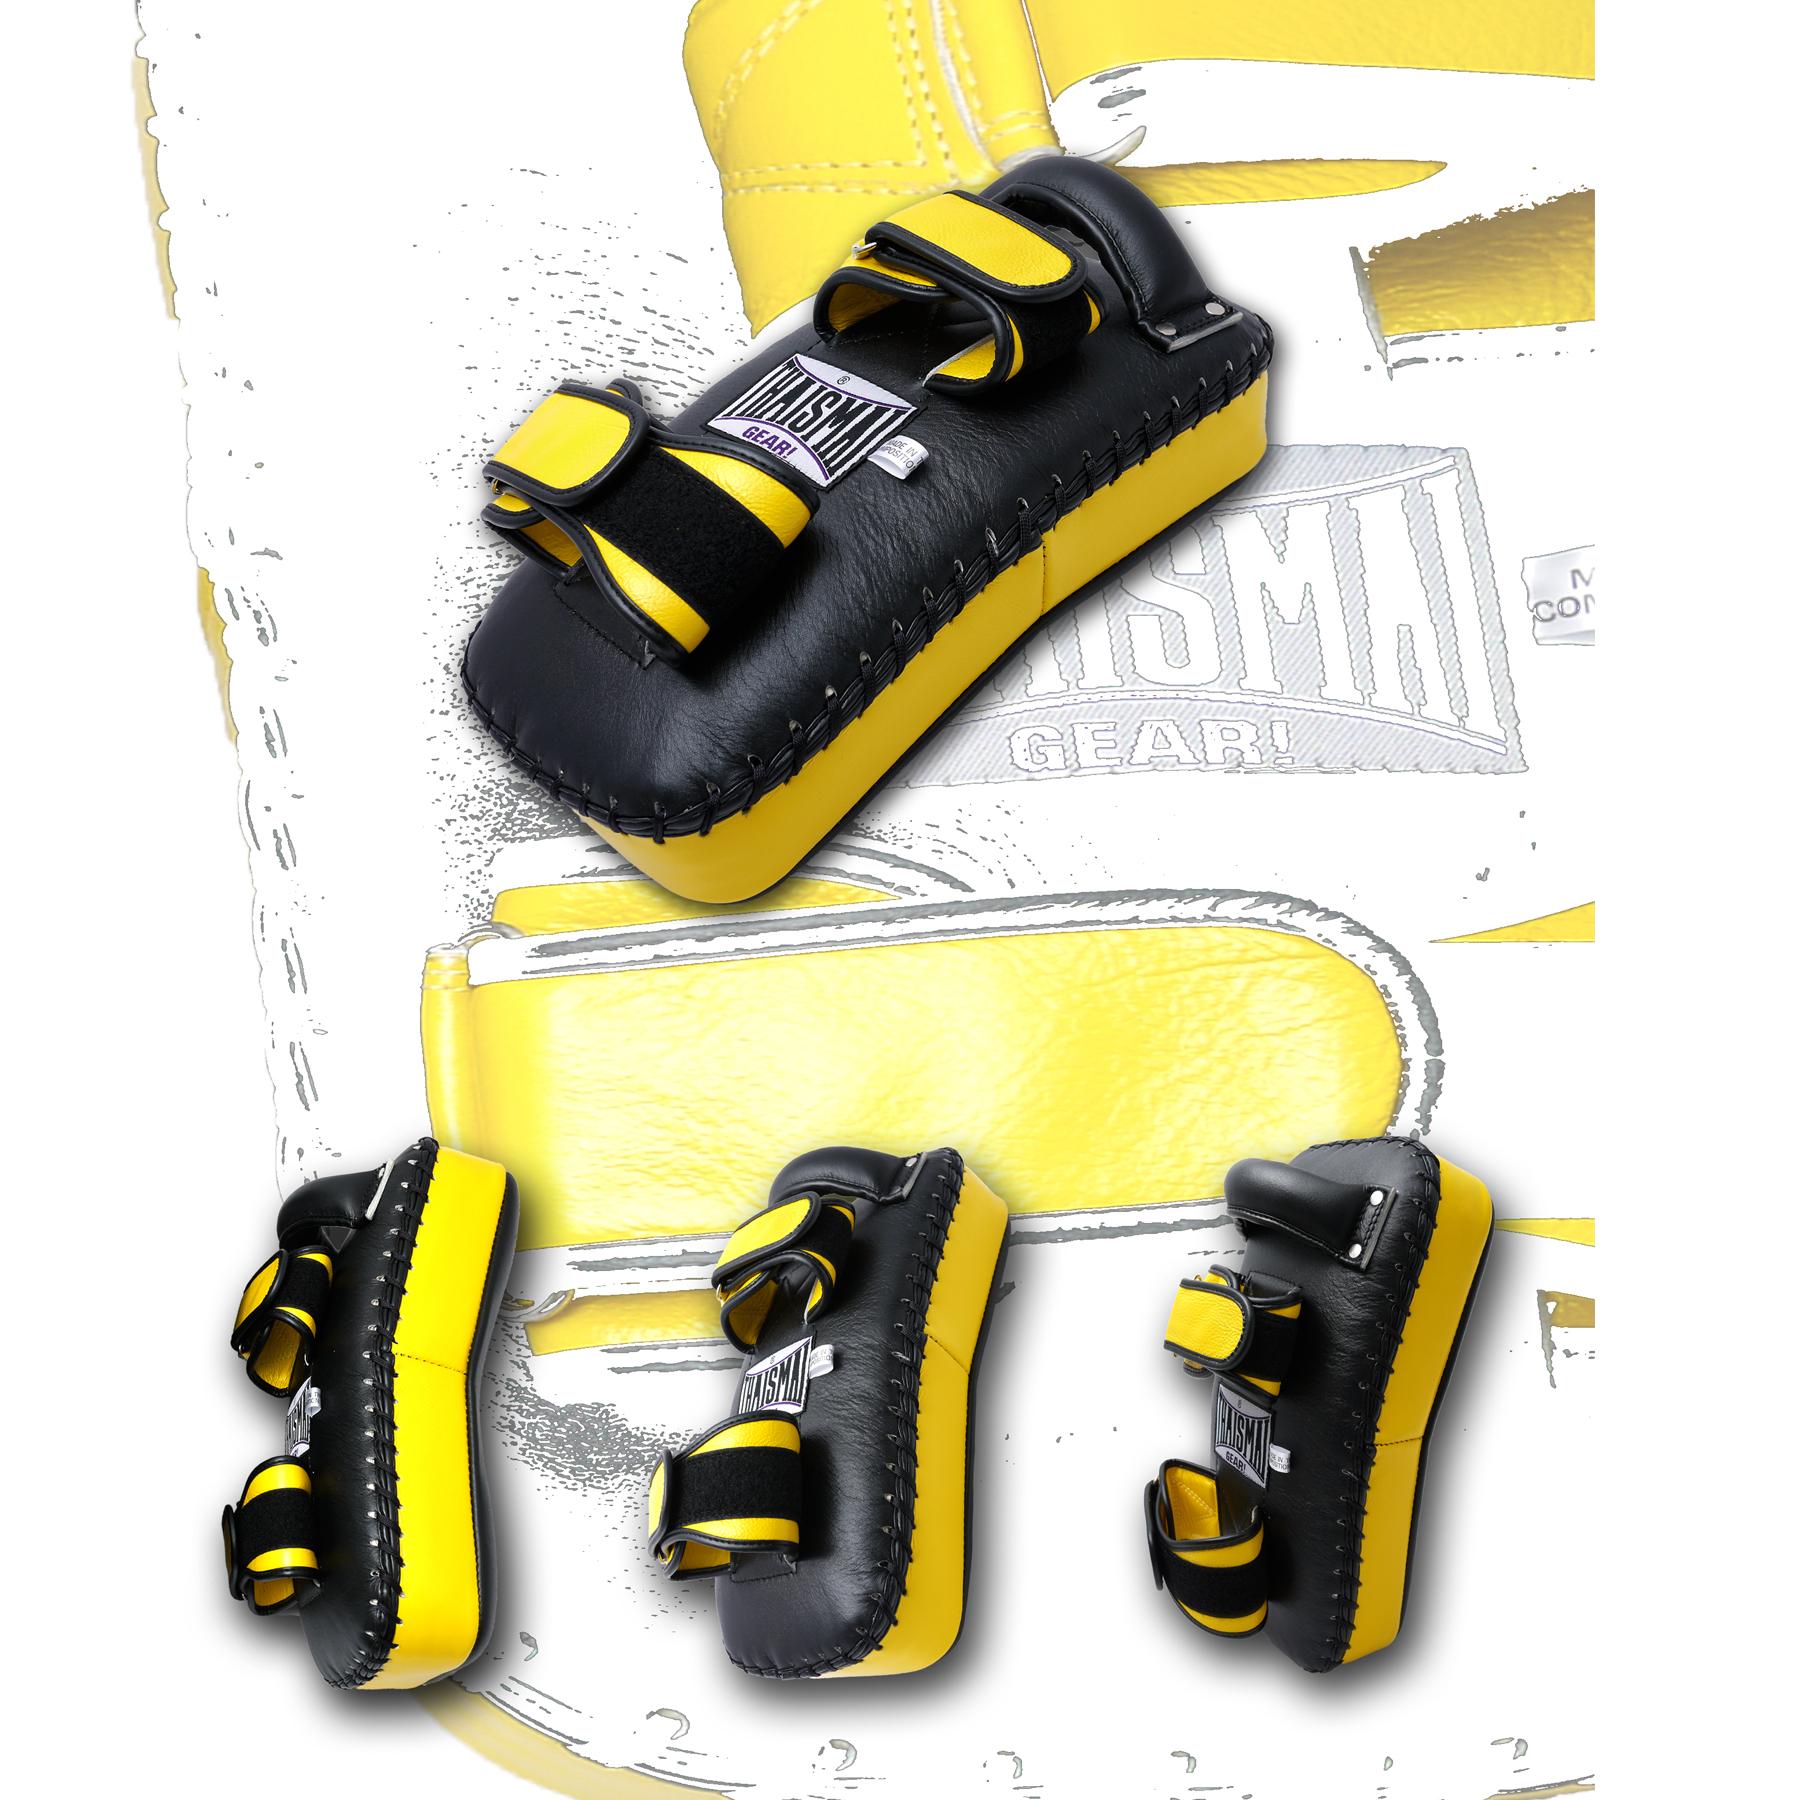 THAISMAI  KP-142 - เป้าเตะ แบบโค้ง หนังแท้ สีเหลือง/ดำ 1ข้าง - Kick Pad Curved Leather Yellow/Black  1 Piece